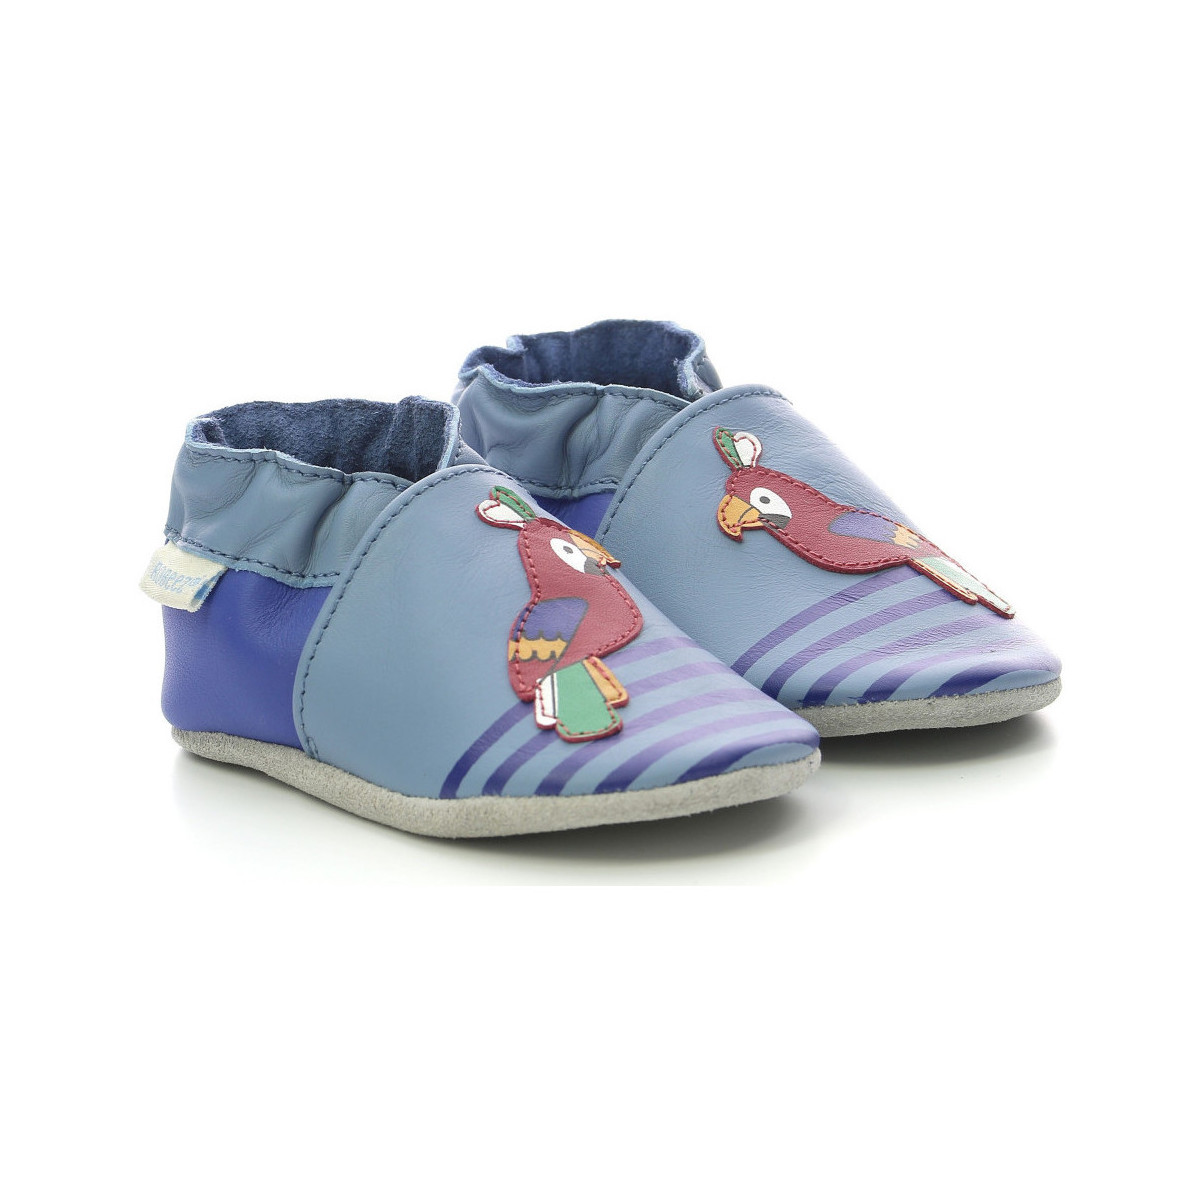 Schuhe Jungen Babyschuhe Robeez Macao Parrot Blau